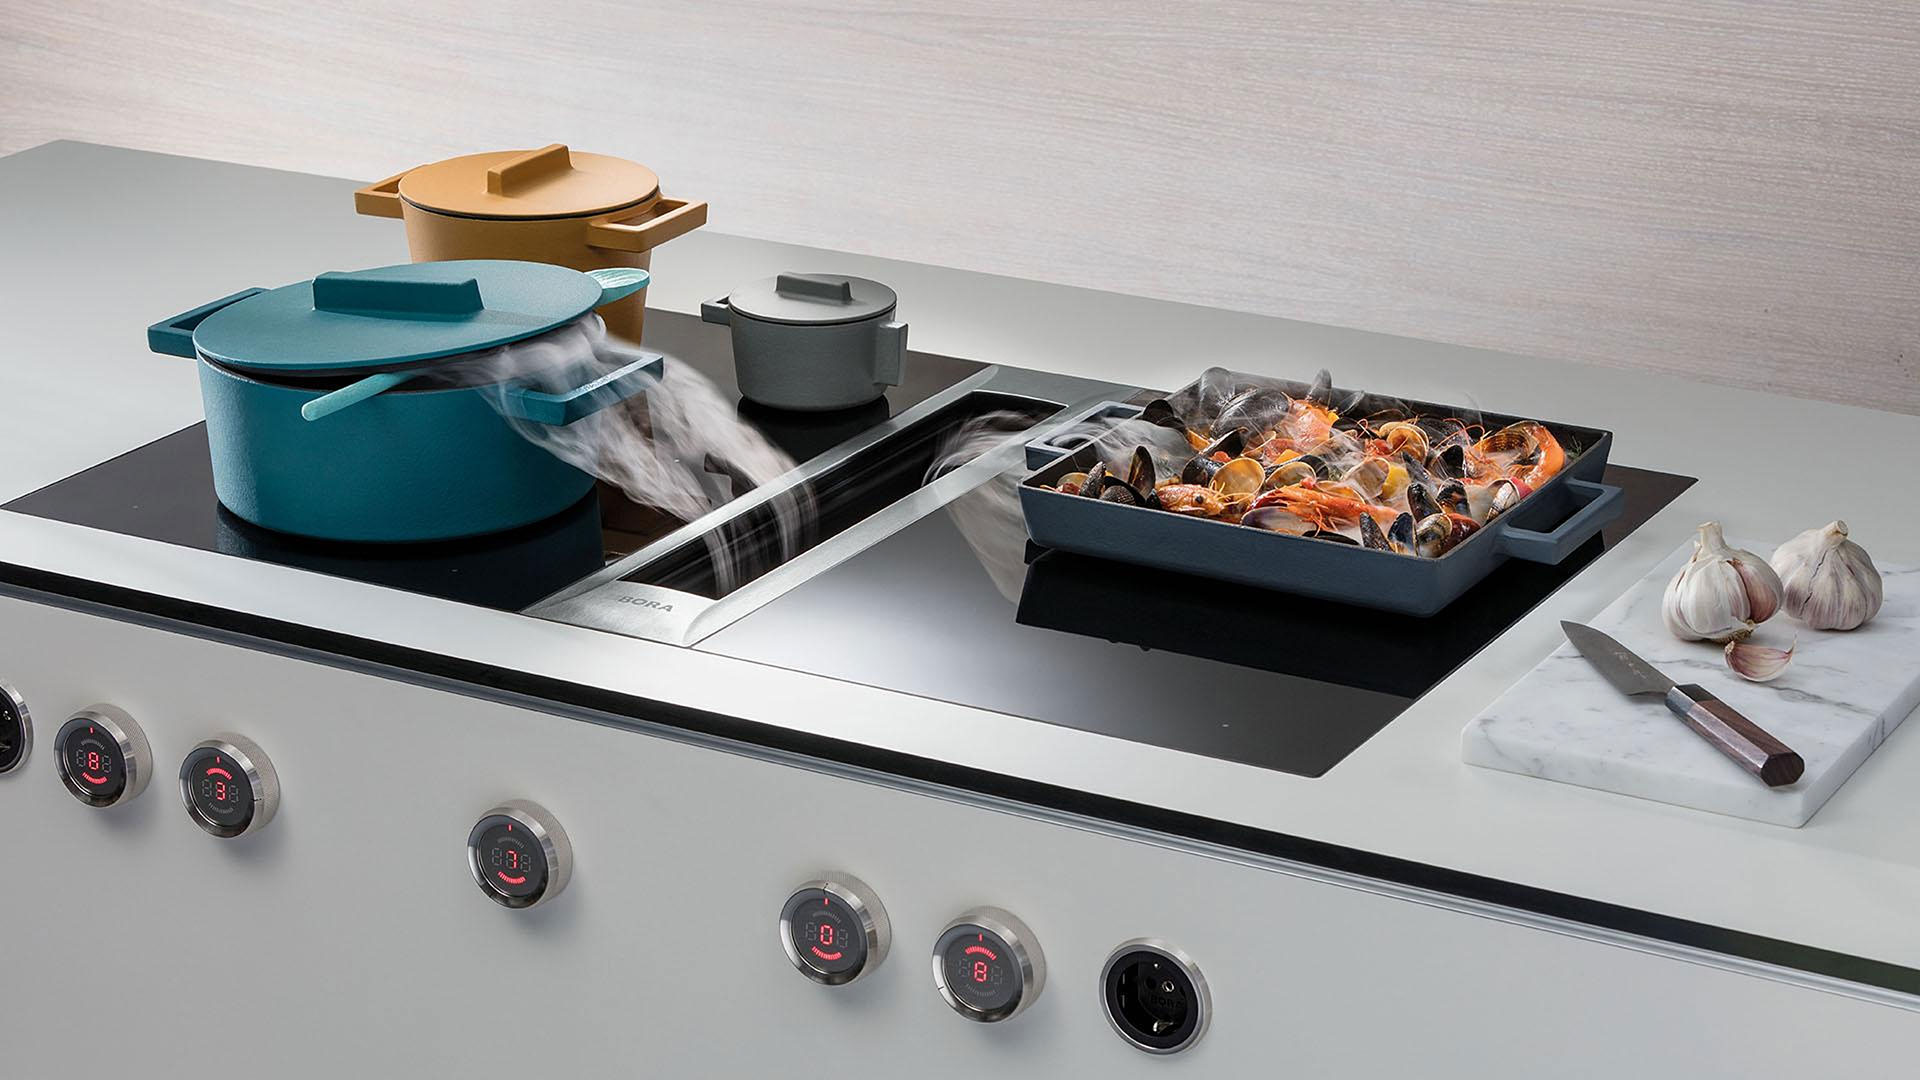 Bora Professional Kochfeld mit integriertem Dunstabzug – das innovative Küchenhighlight